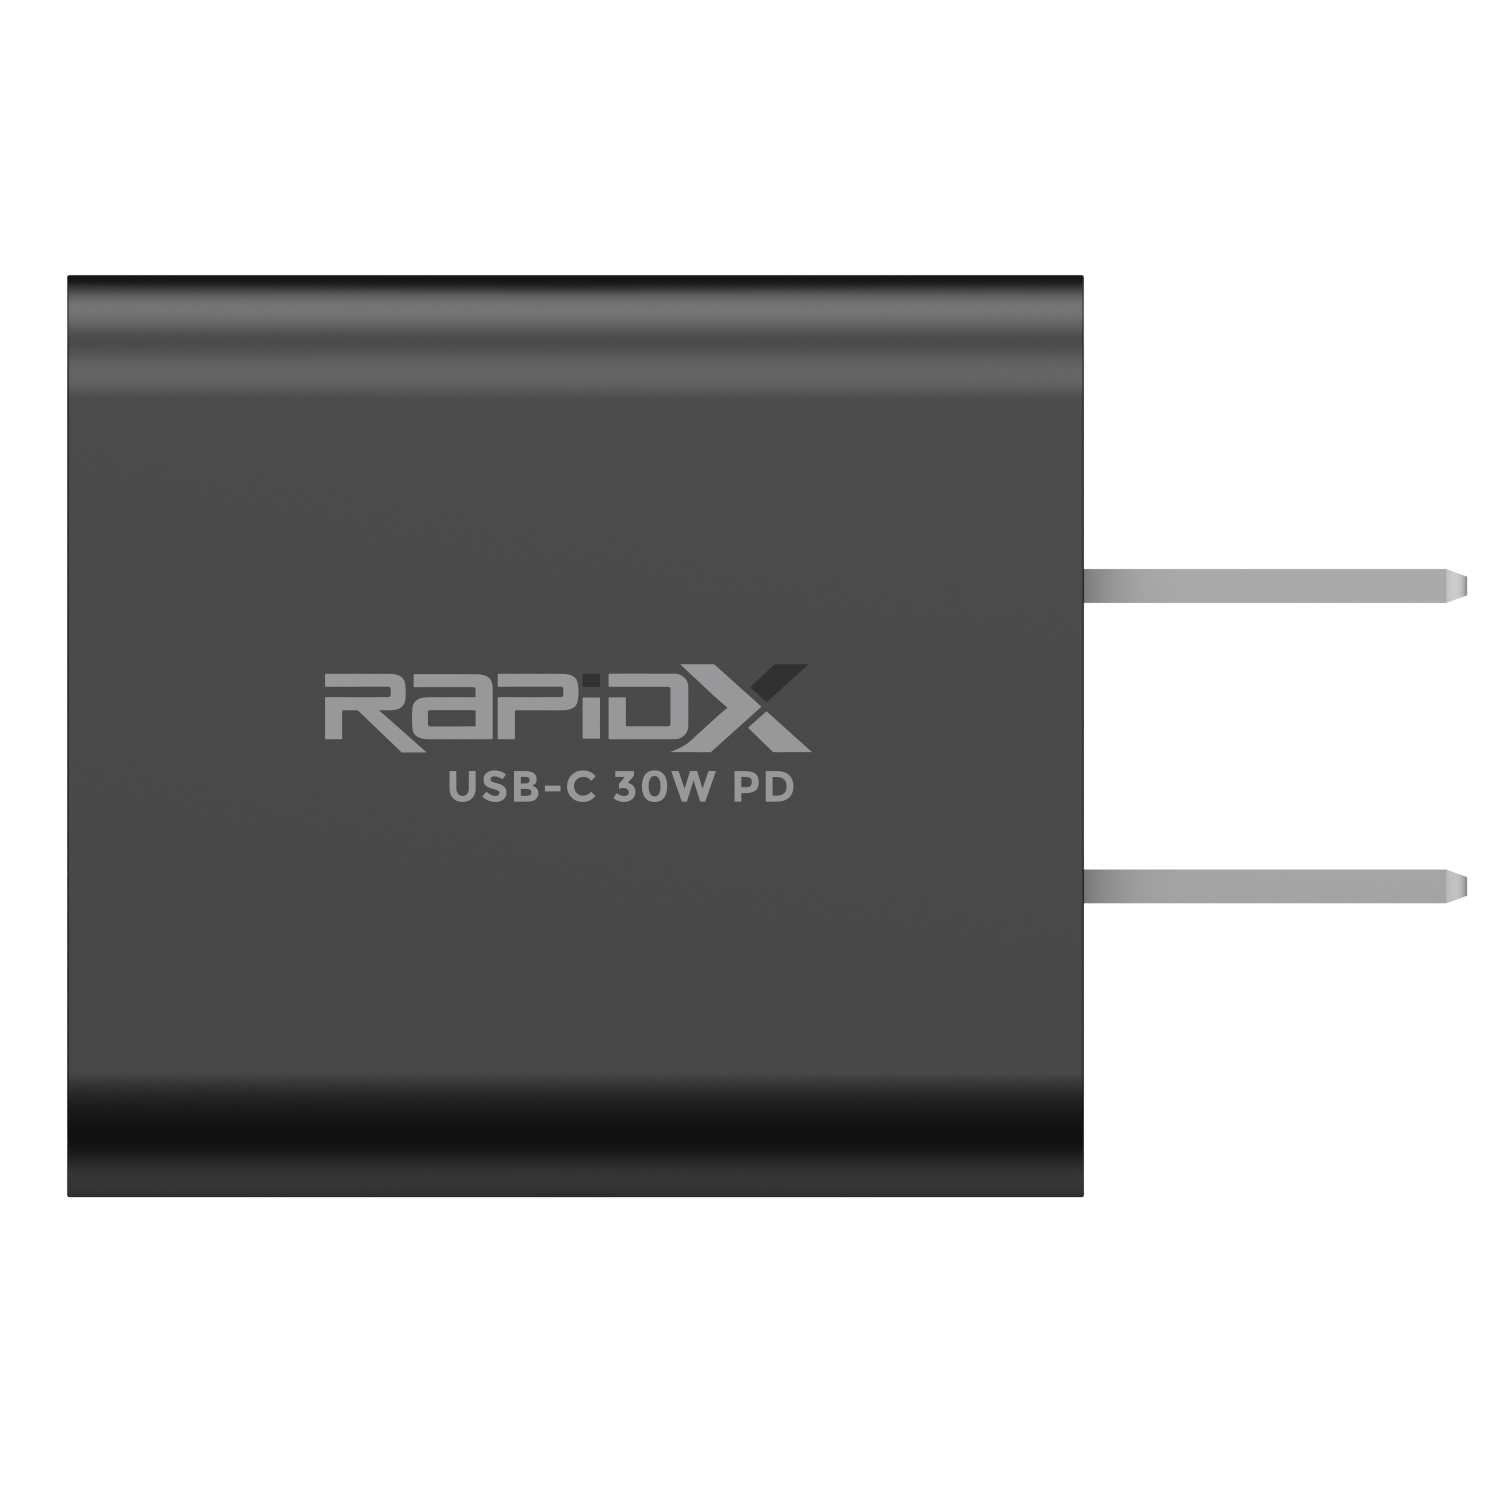 Ripley - RAPIDX USB-C 30W PD CARGADOR DE PARED SÚPER COMPACTO CARGA RÁPIDA  IPHONE 12 DISPOSITIVOS ANDROID BANCOS DE ENERGÍA PORTÁTIL